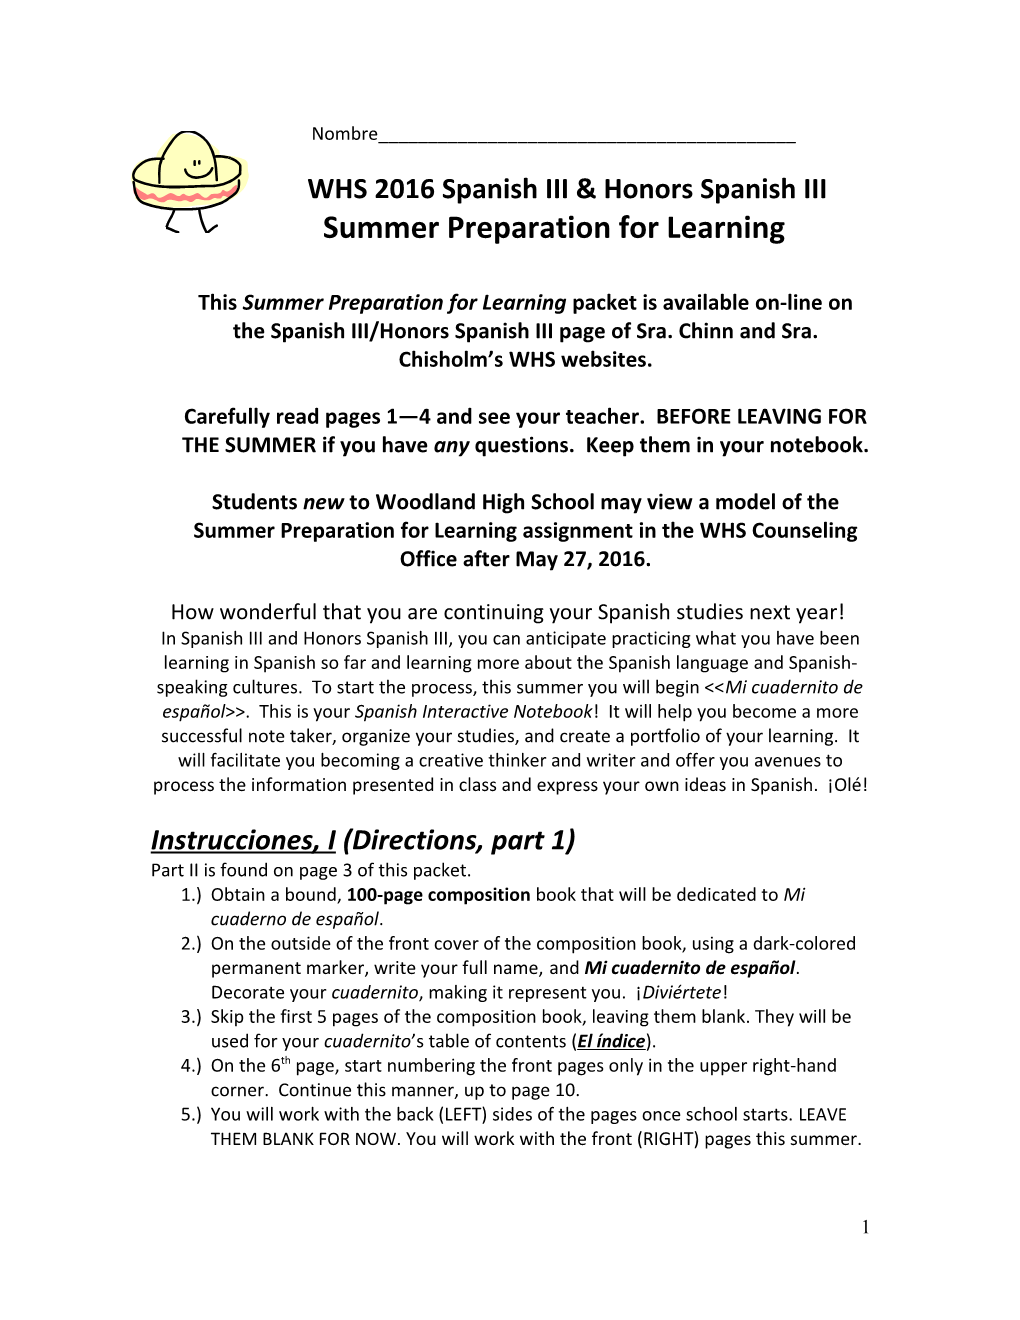 WHS 2016Spanish III Honors Spanish III